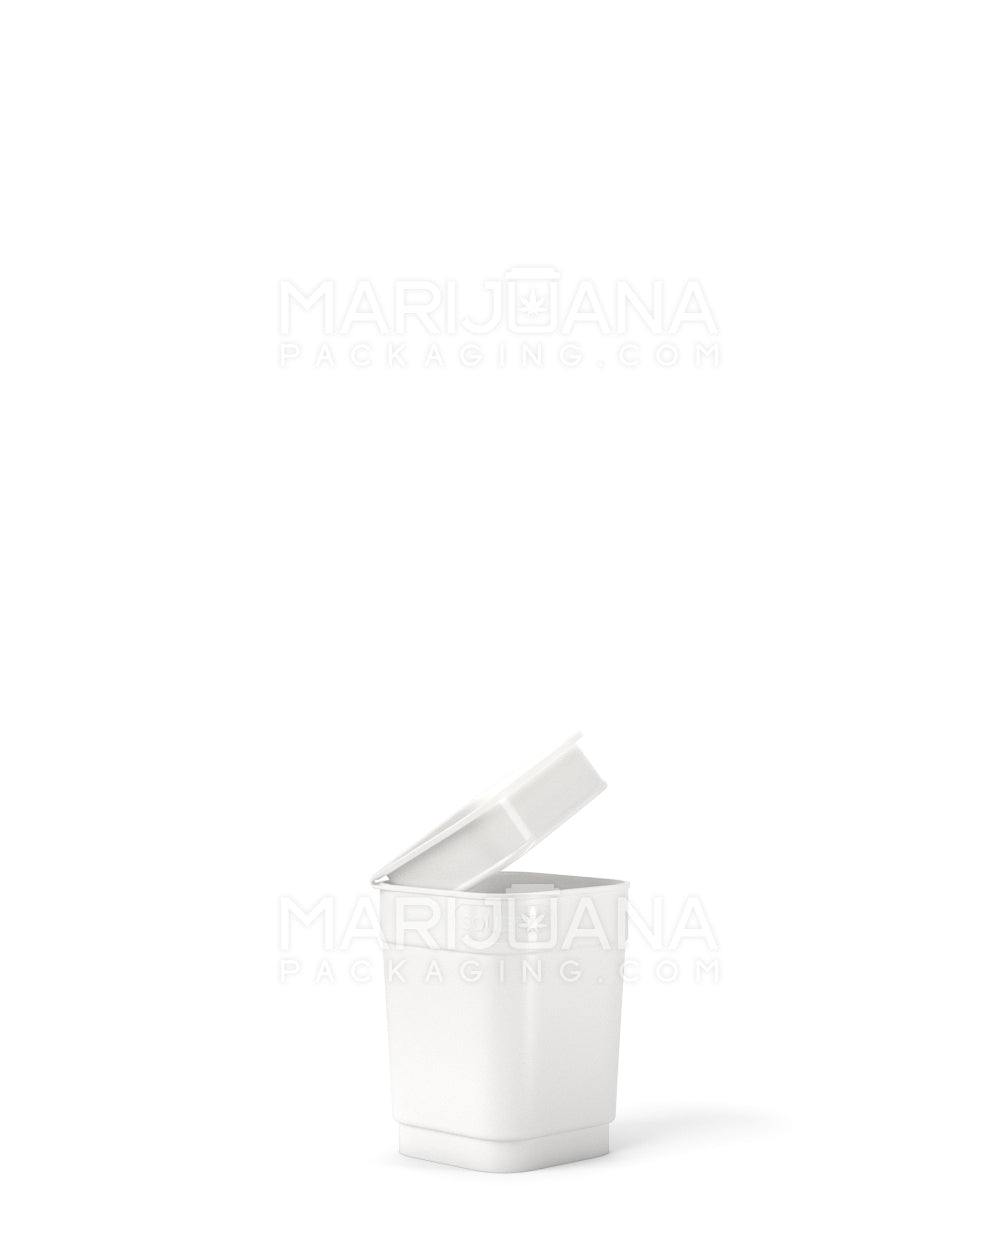 POLLEN GEAR 100% Recyclable Opaque White Pop Box Pop Top Bottles | 6dr - 1g | Sample